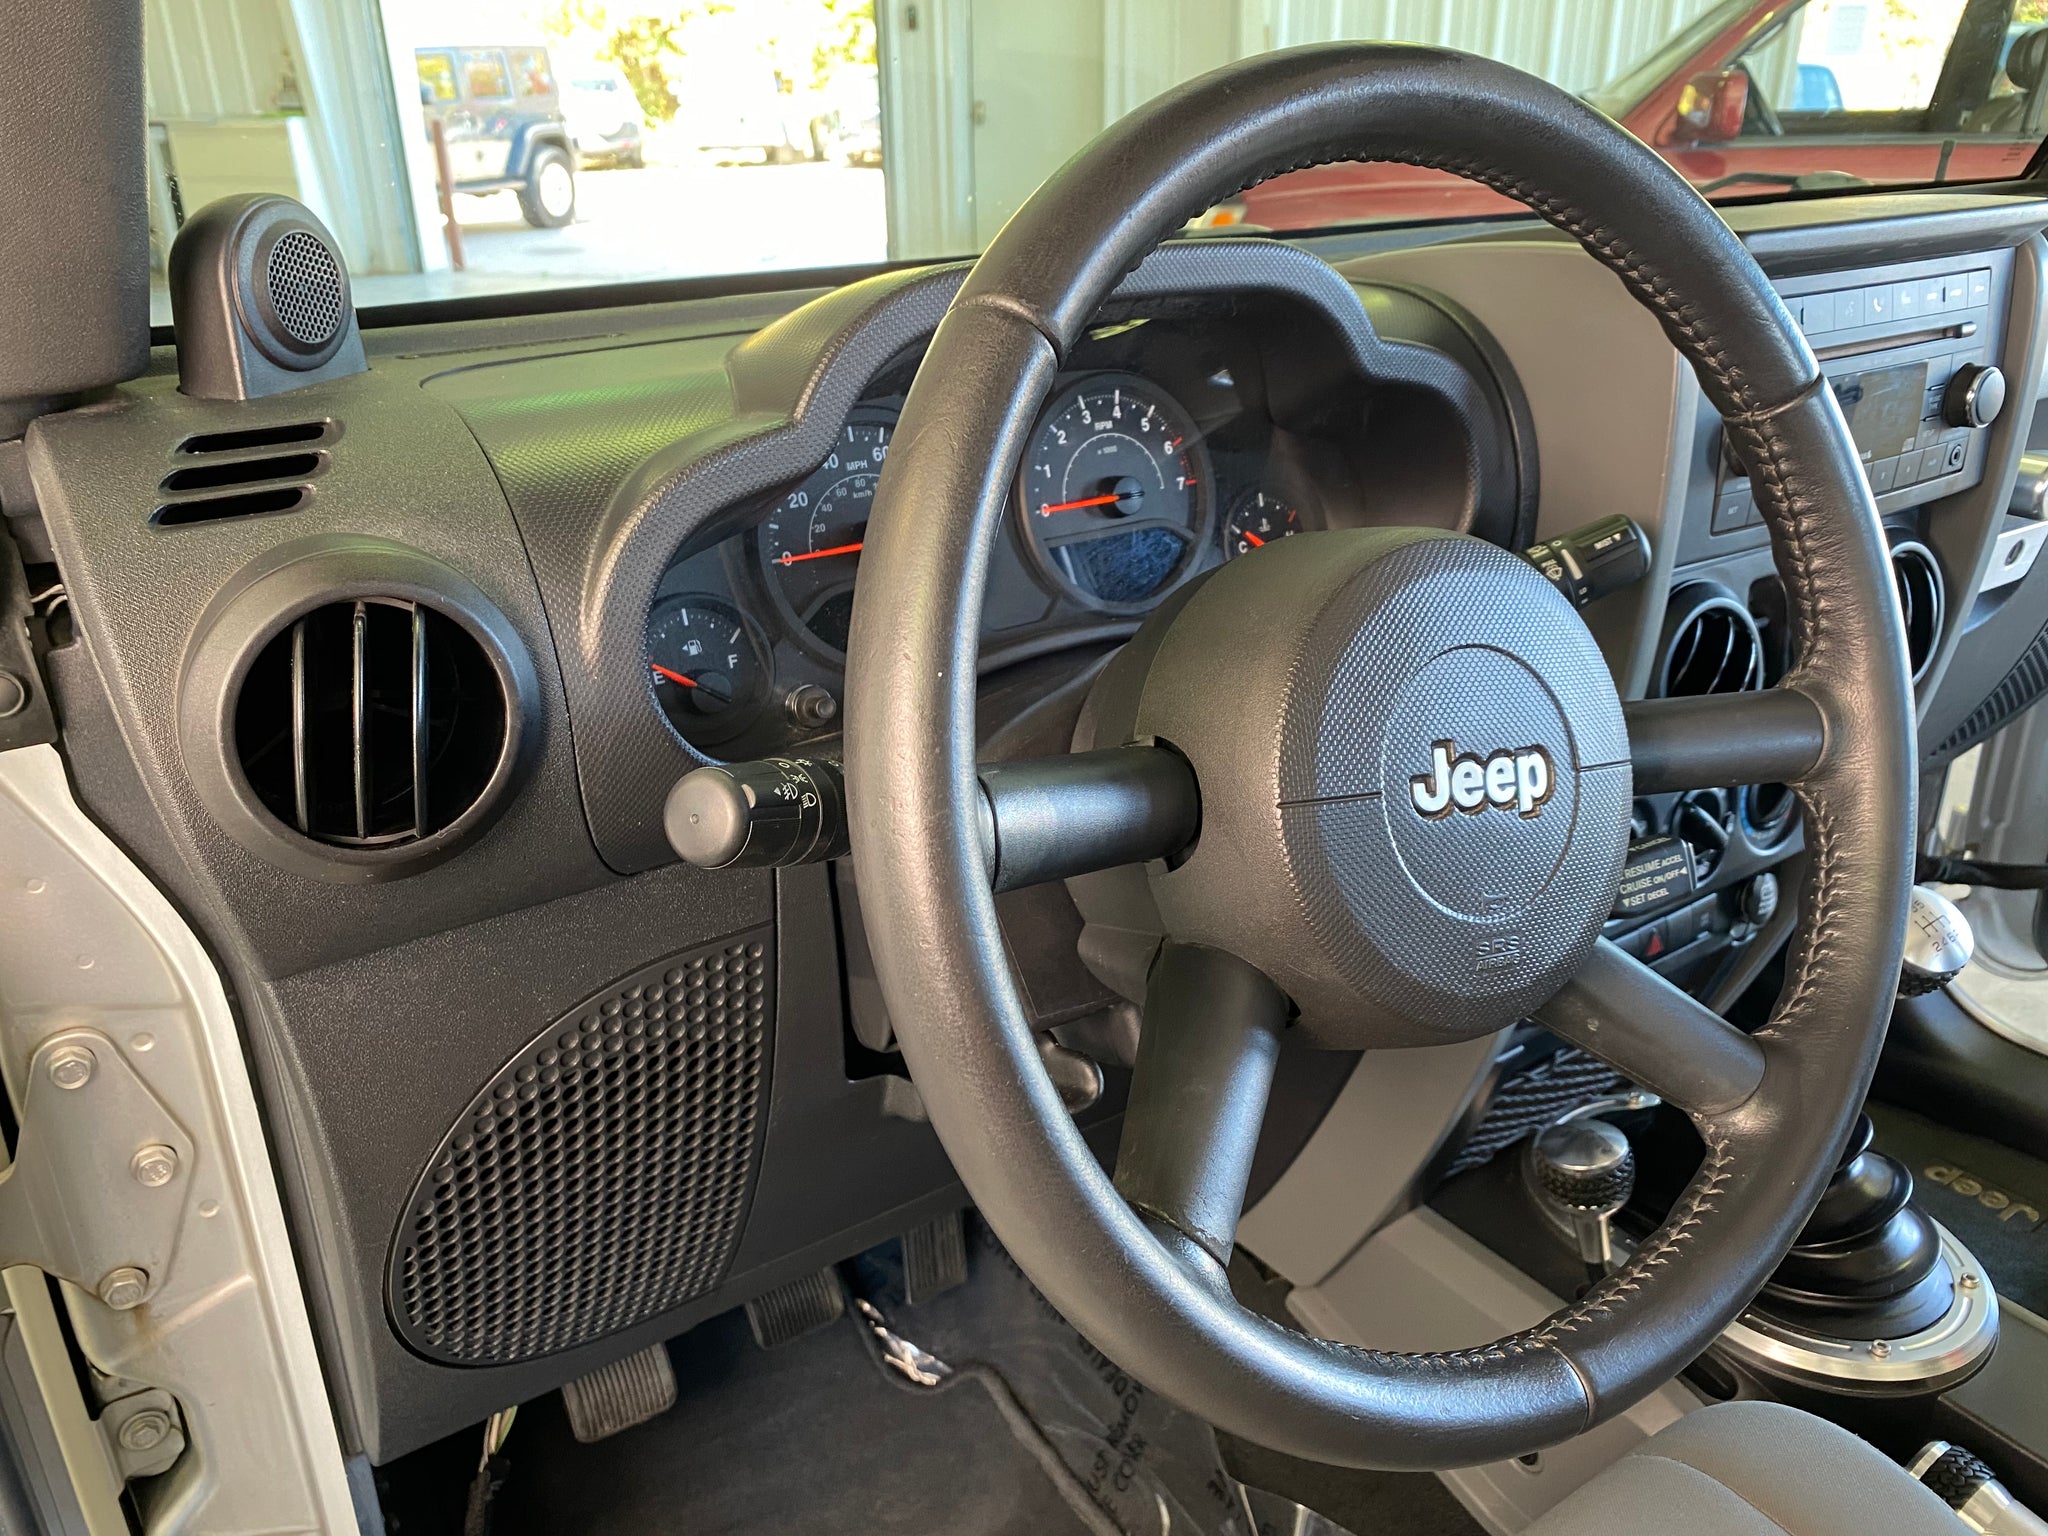 2009 Jeep Wrangler Unlimited 4WD Manual - ShiftedMN